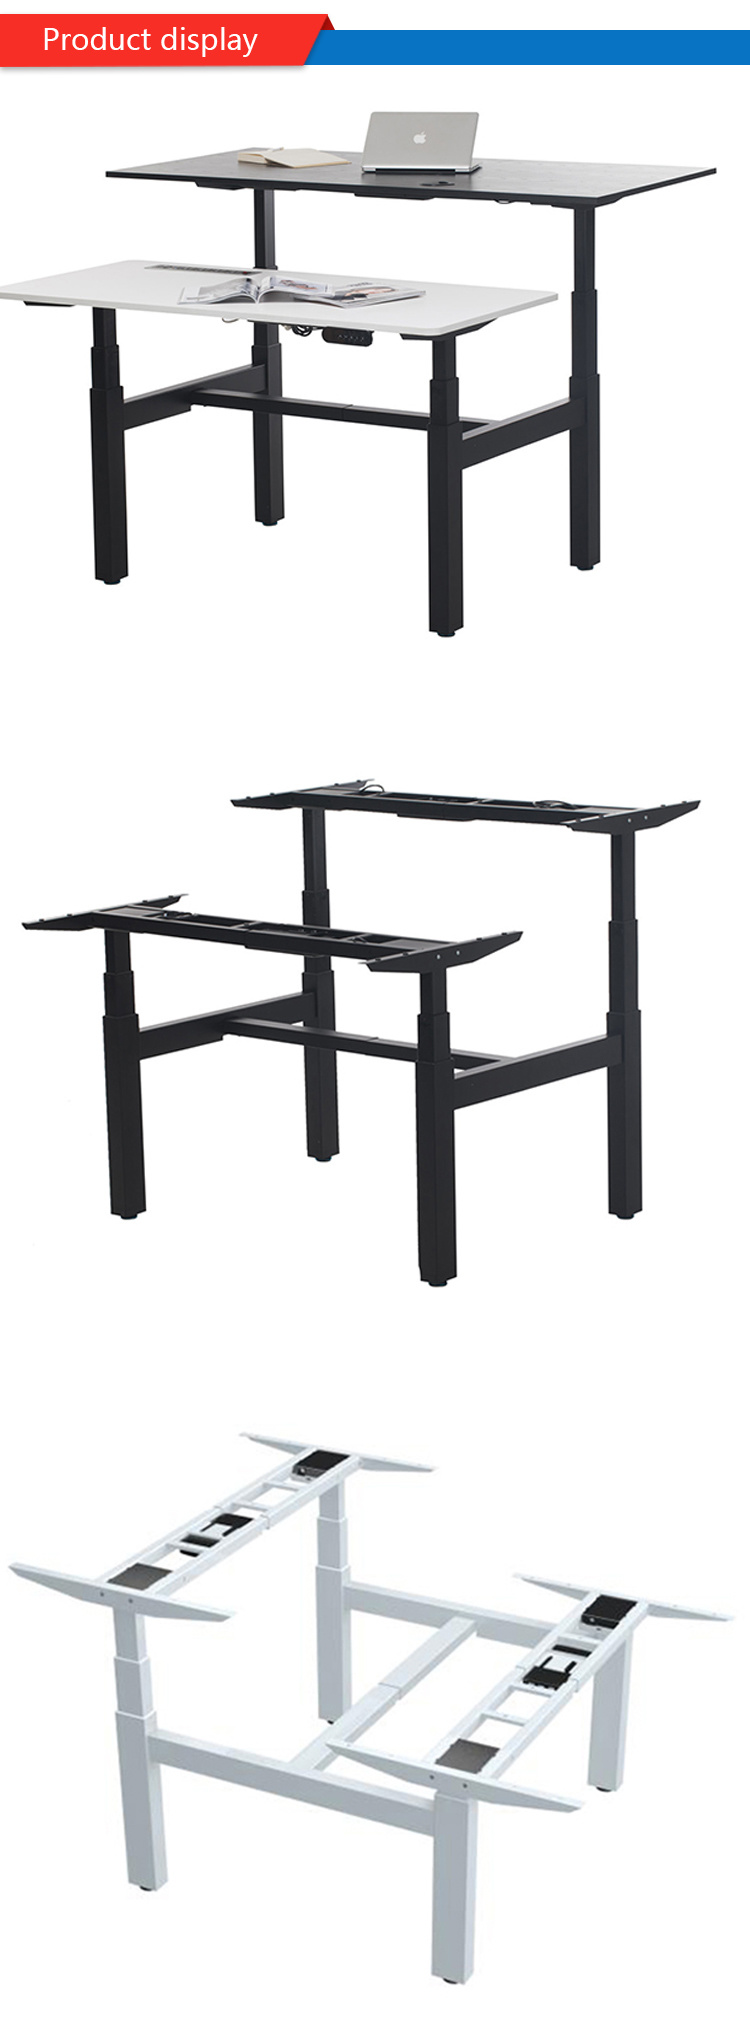 Adjustable Desk 4 People Height Adjustable Desk with Table Top